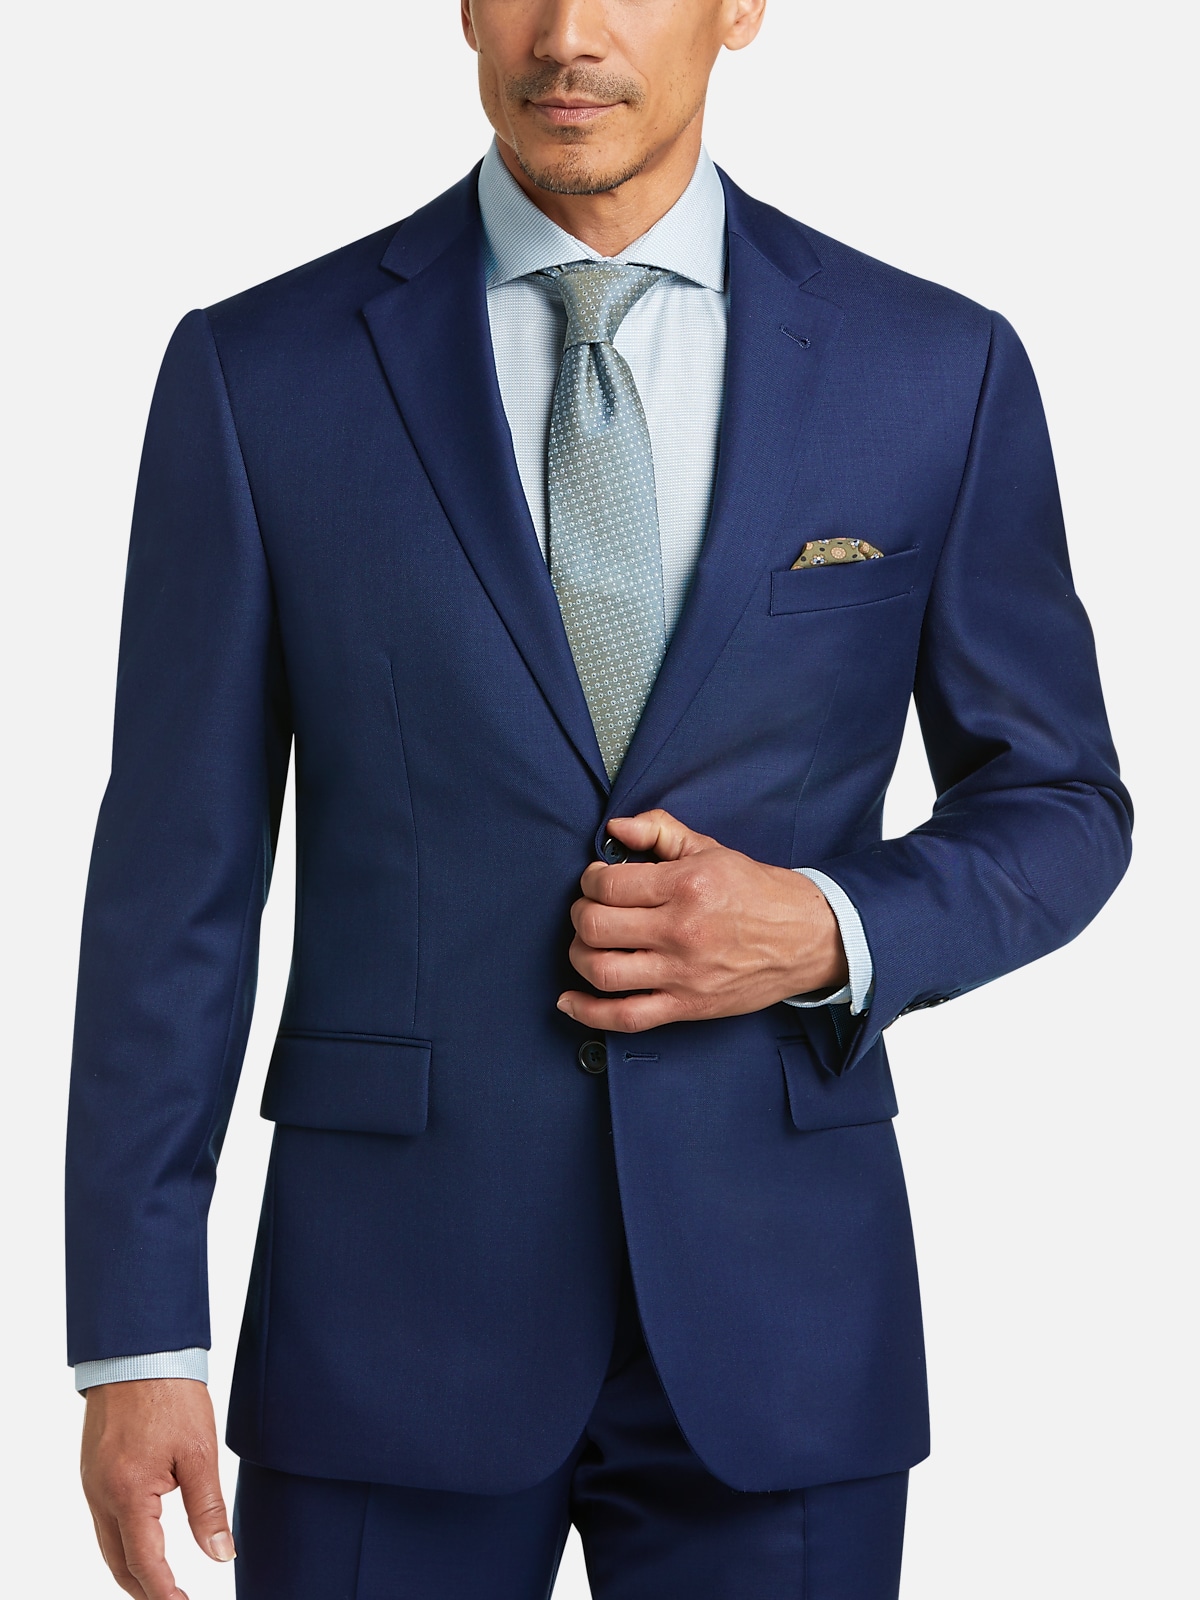 JOE Joseph Abboud Bright Modern Fit Vested Suit | All Clothing| Men's ...